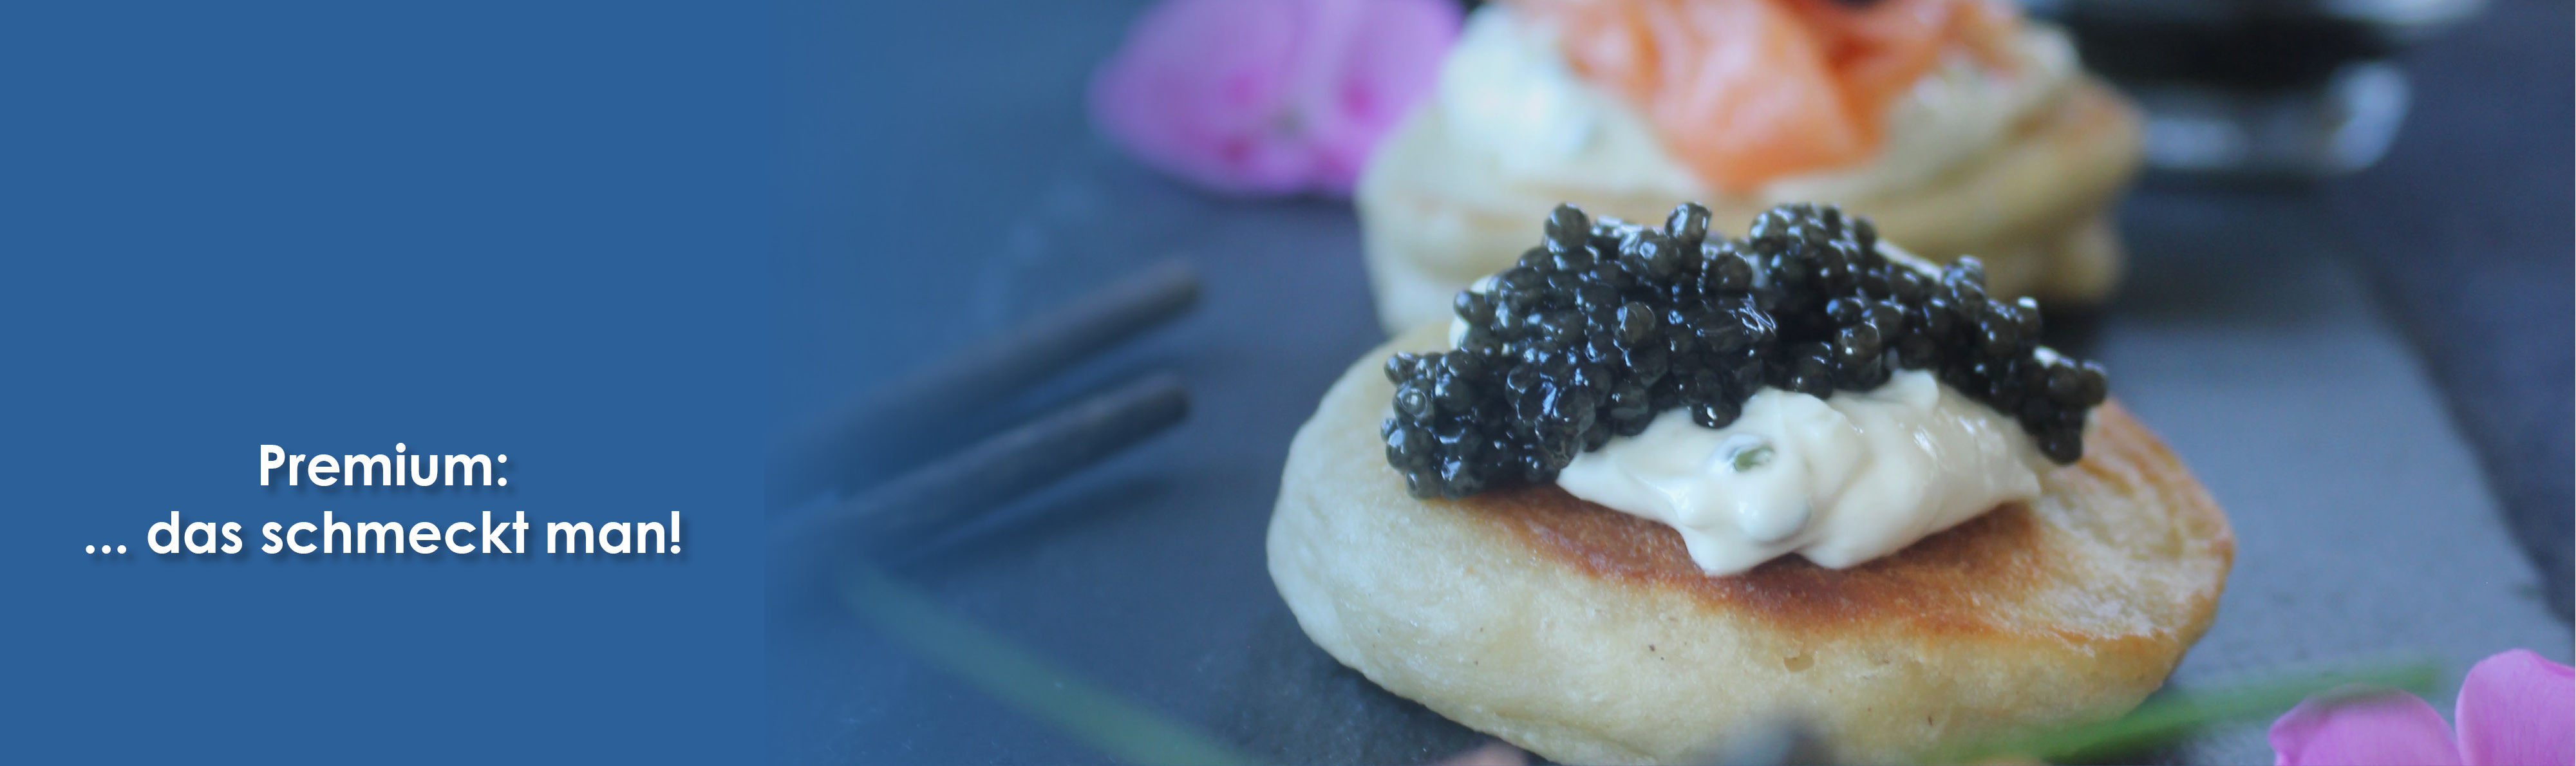 Lauenroth premium Kaviar